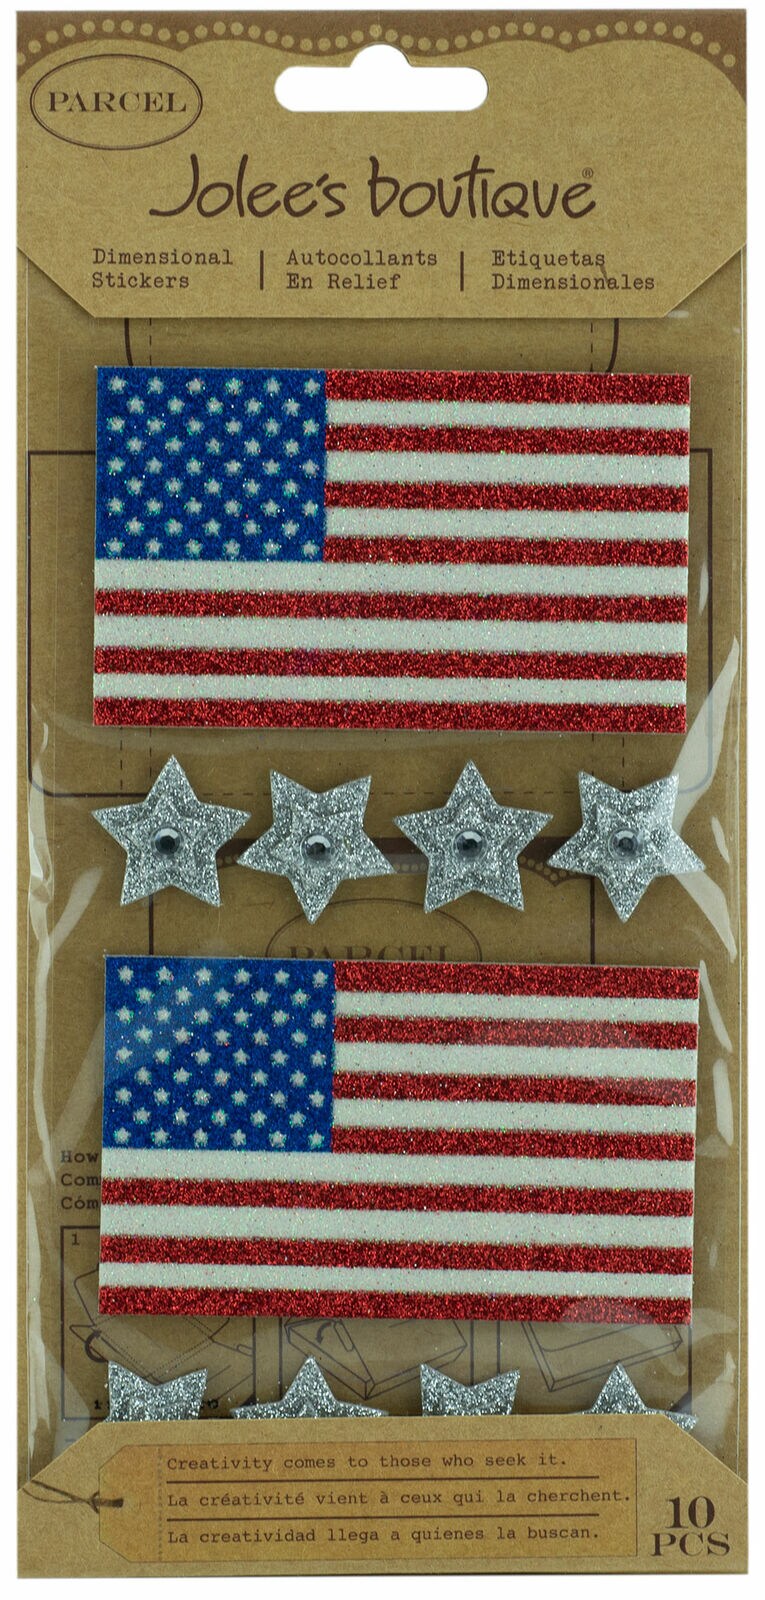 Jolee&#x27;s Boutique Parcel Glitter Flags &#x26; Stars Dimensional Stickers